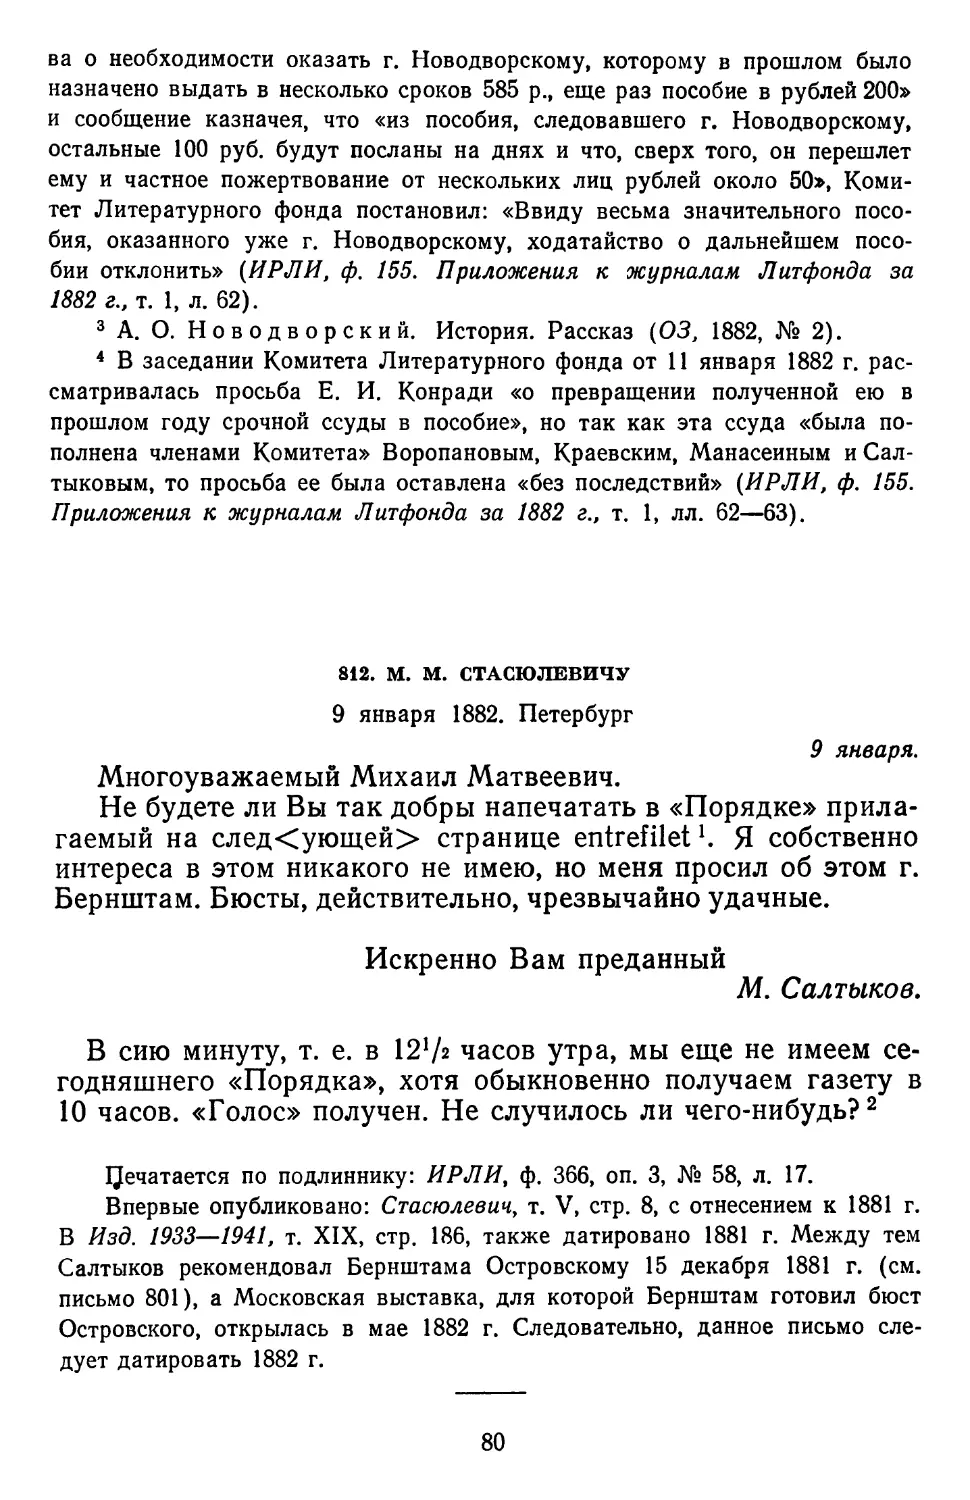 812.М. М. Стасюлевичу. 9 января 1882. Петербург .